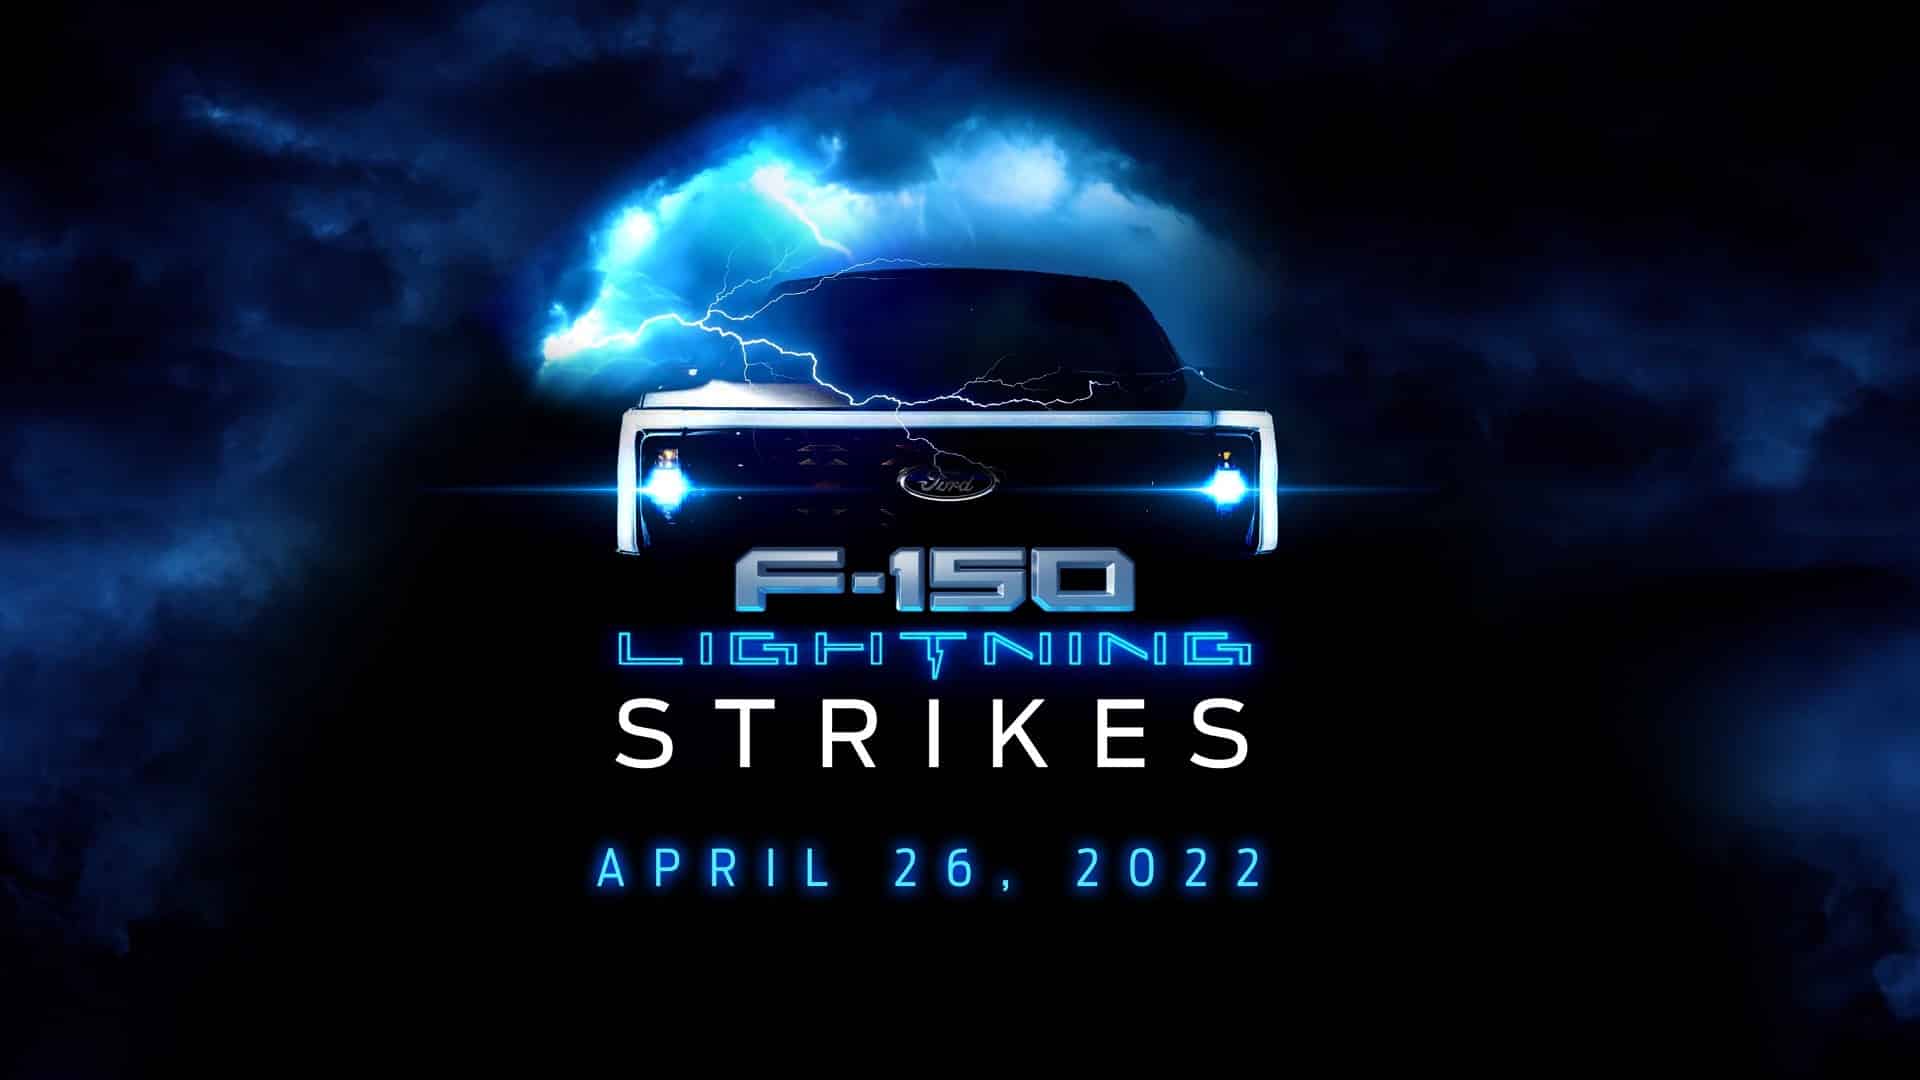 Ford F-150 Lightning Strikes April 26, 2022